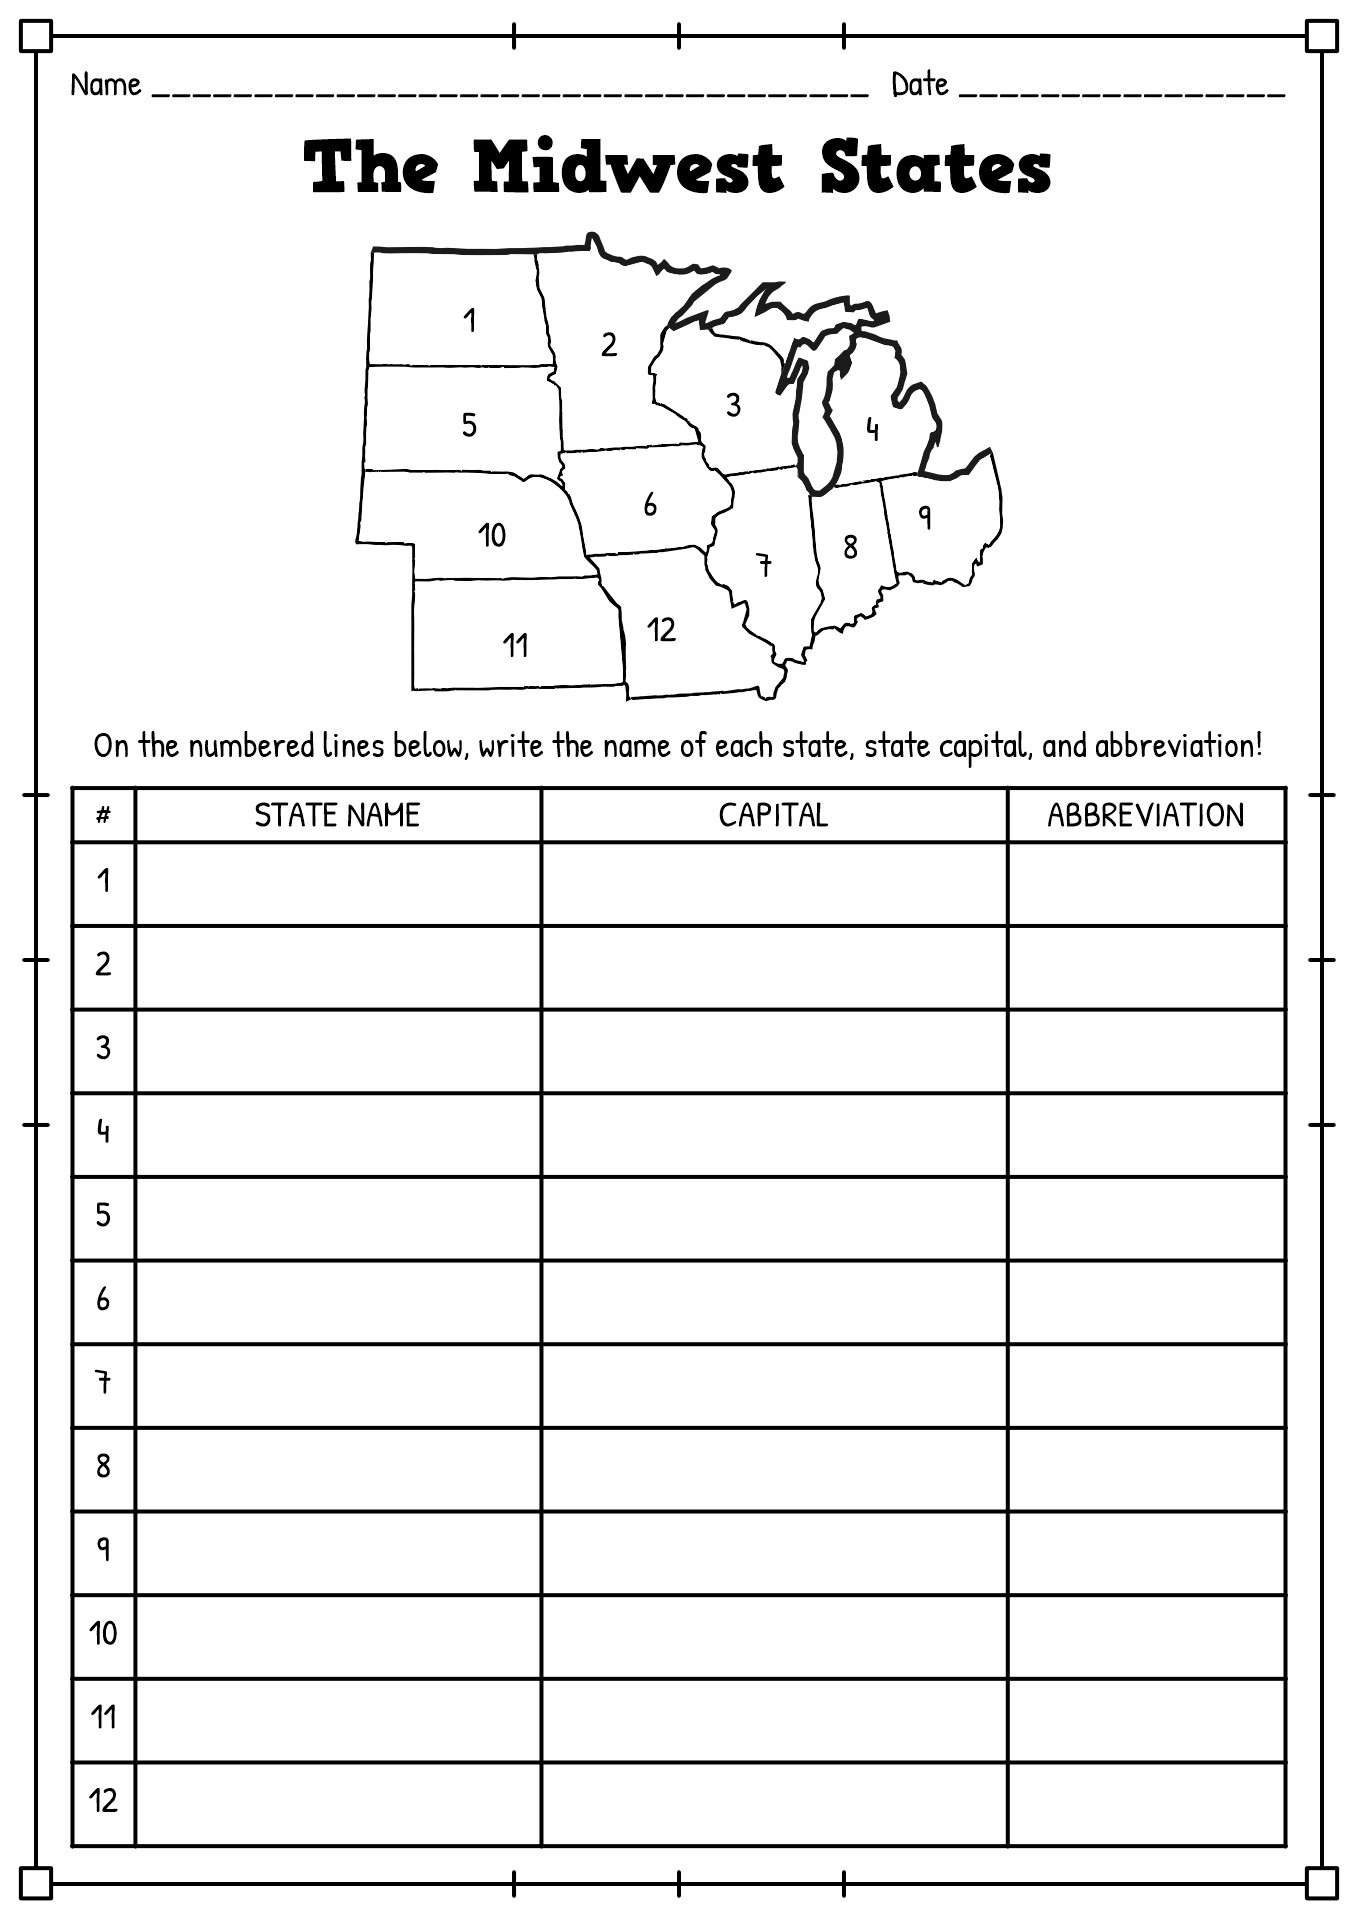 midwest-states-quiz-printable